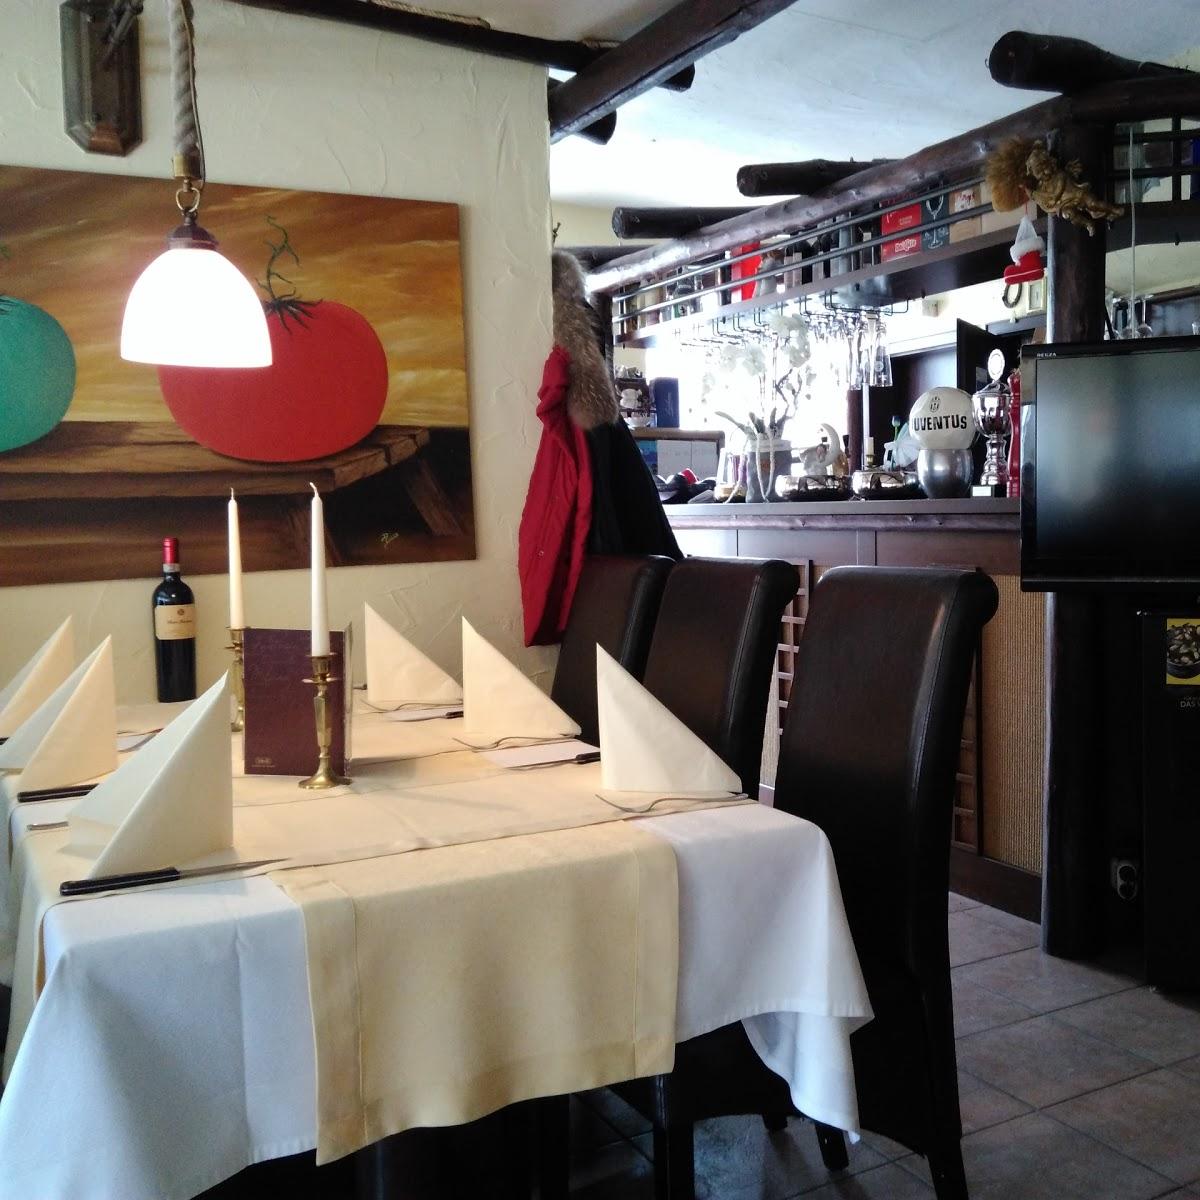 Restaurant "Ristorante Pizzeria Pomodoro" in Vechta